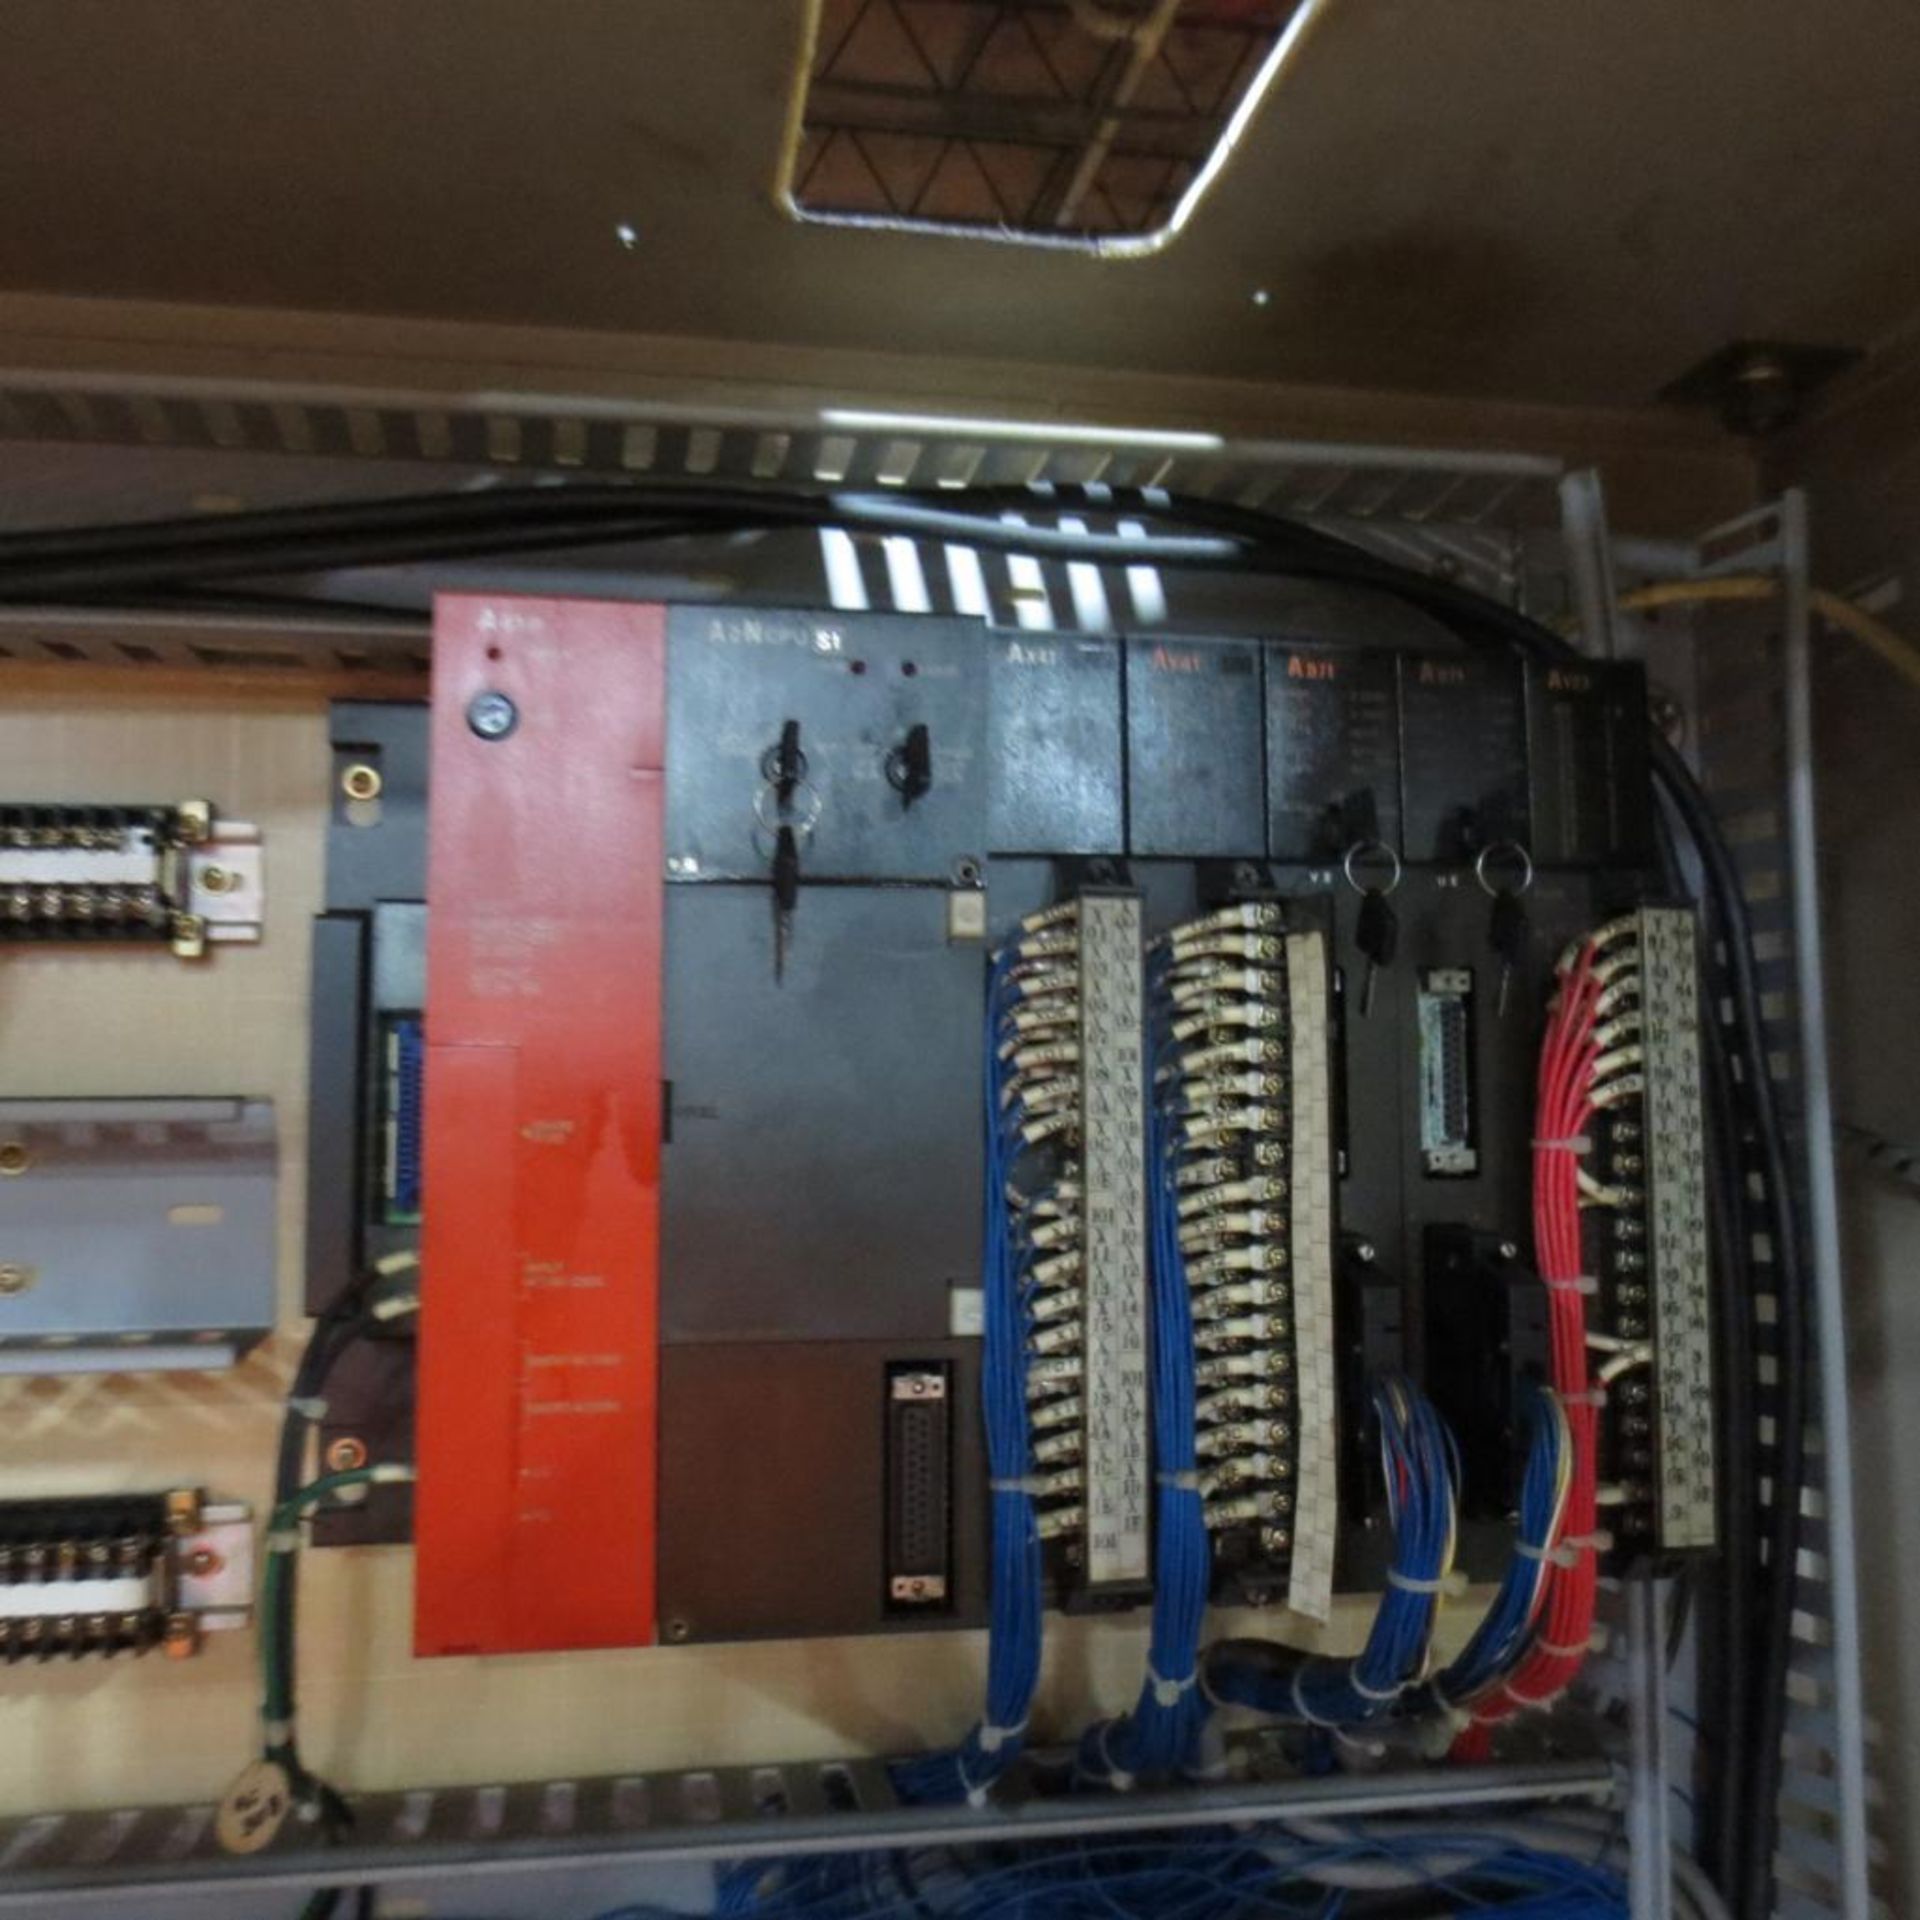 Elliptic Grinder Control Cabinet. Loading Fee is $30.00 - Image 4 of 6